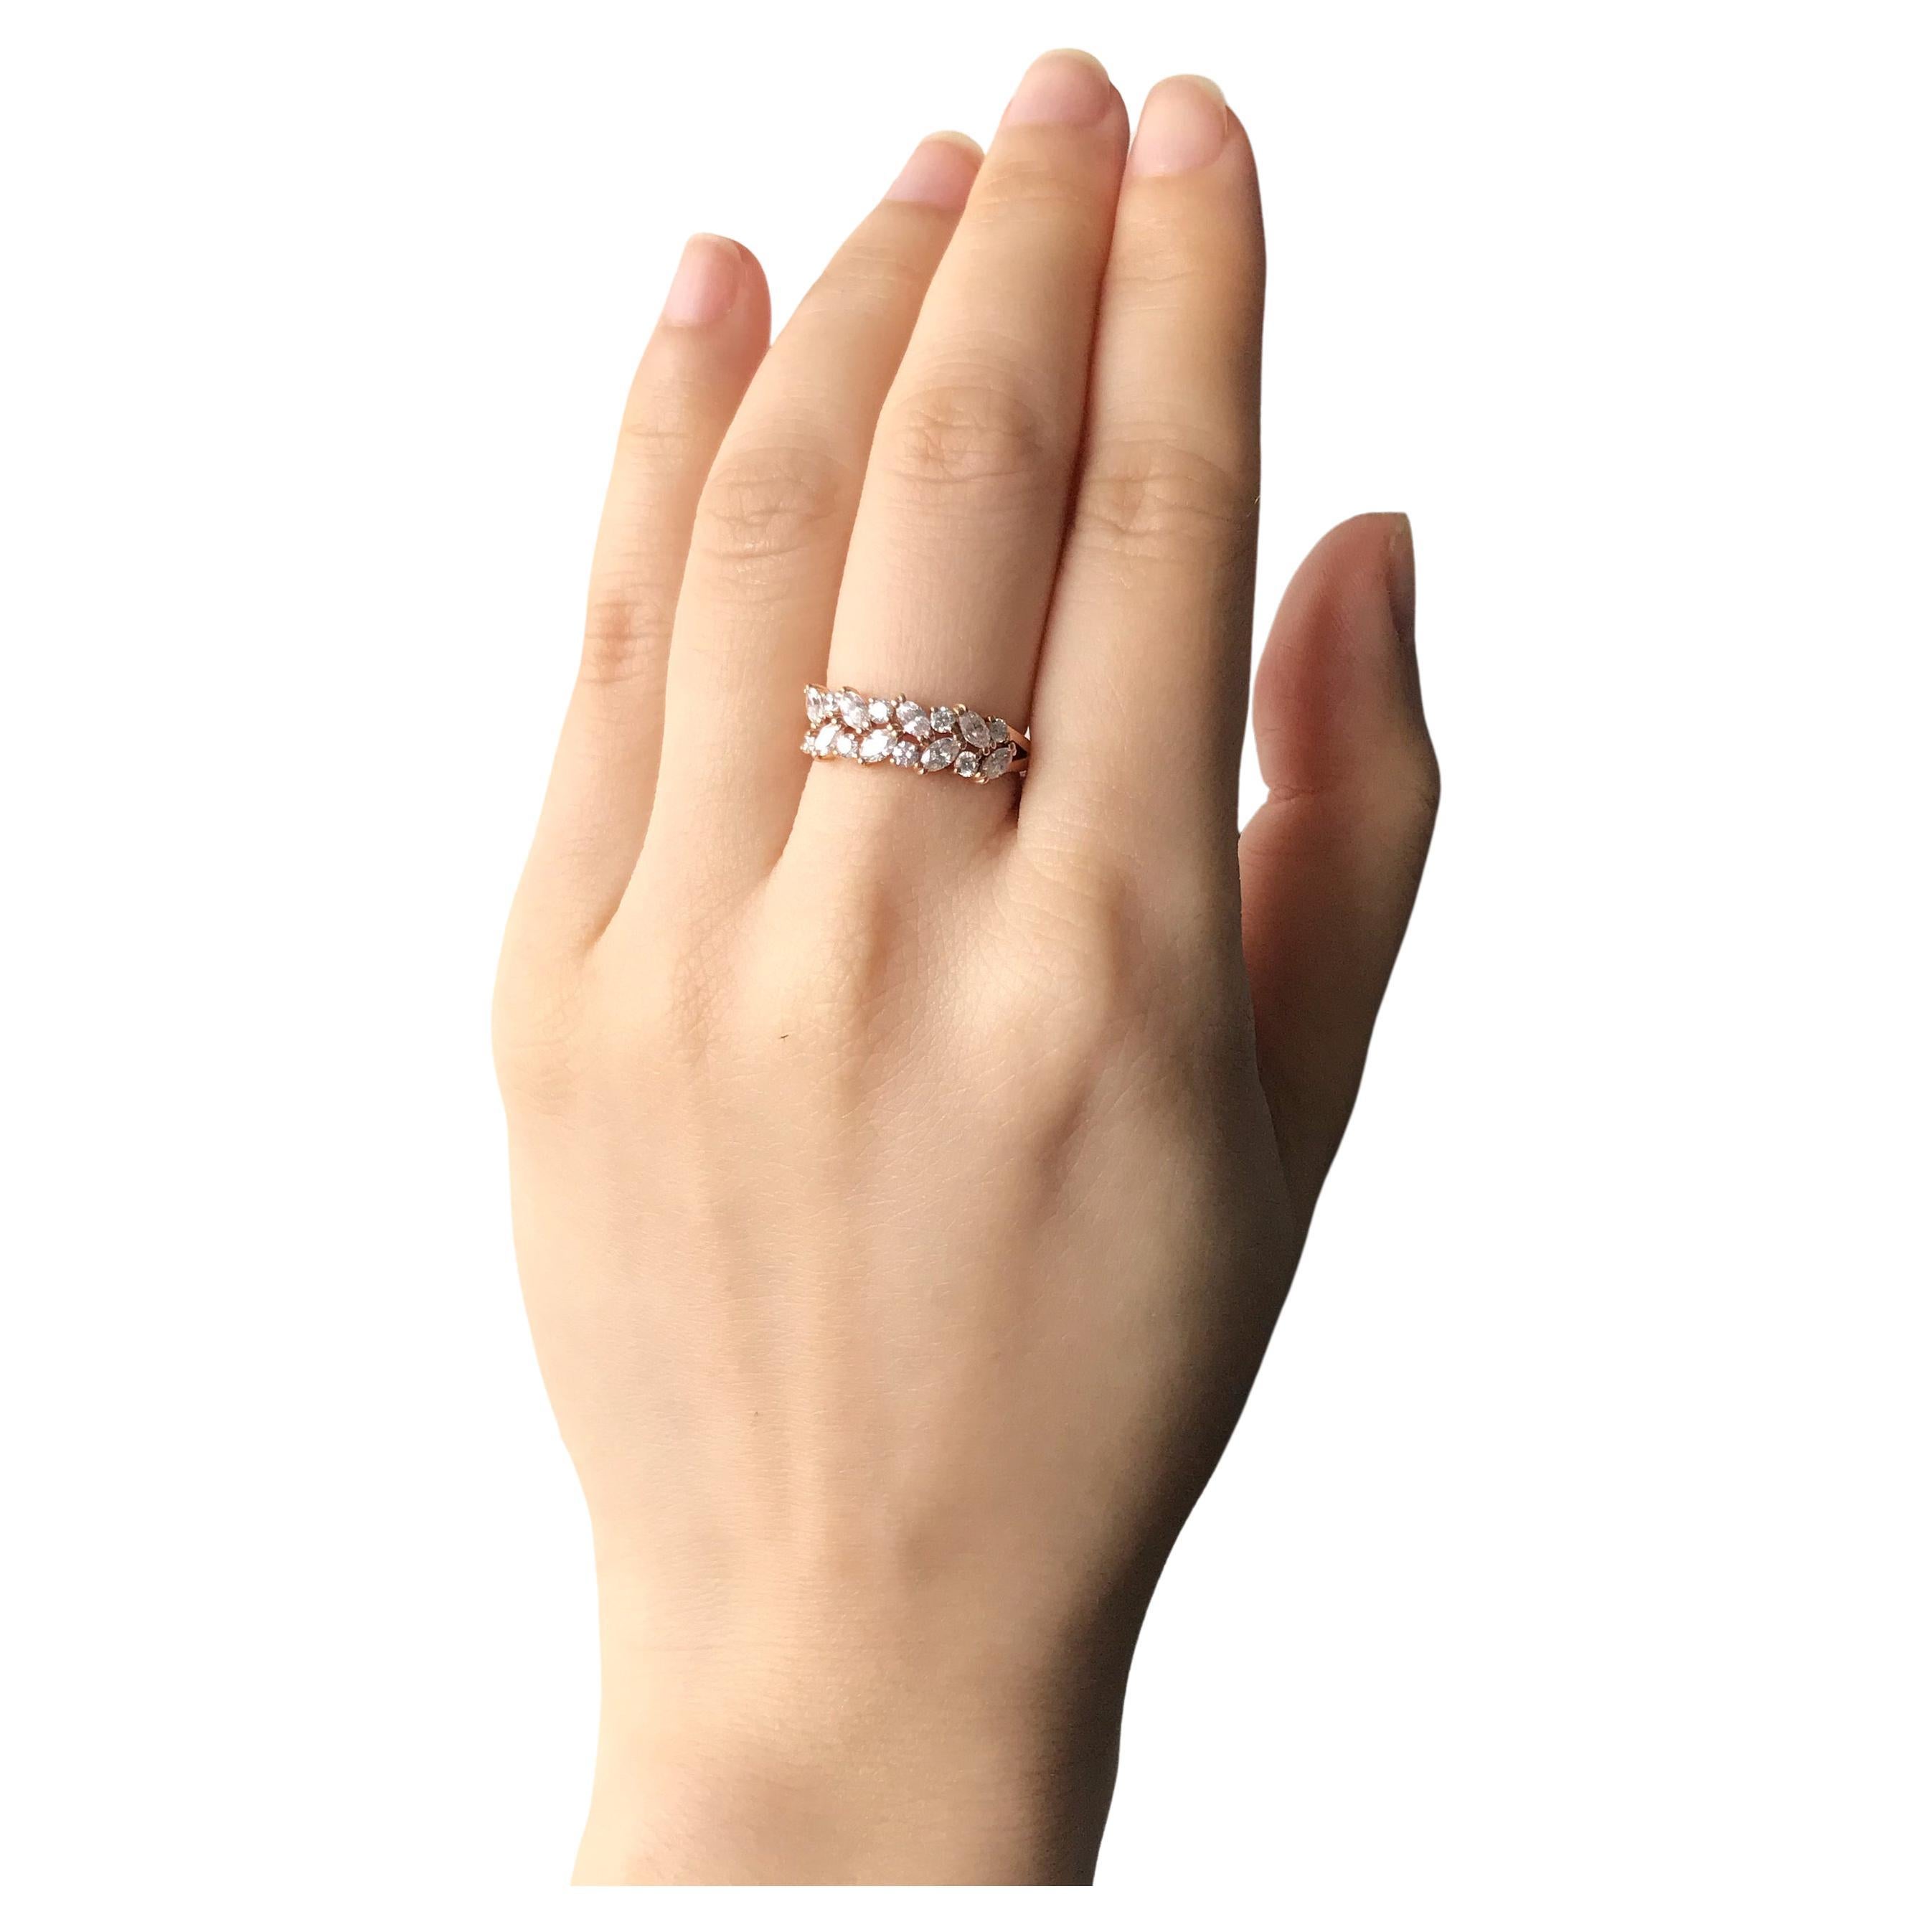 Unique Marquise Diamond Ring in 18k rose gold